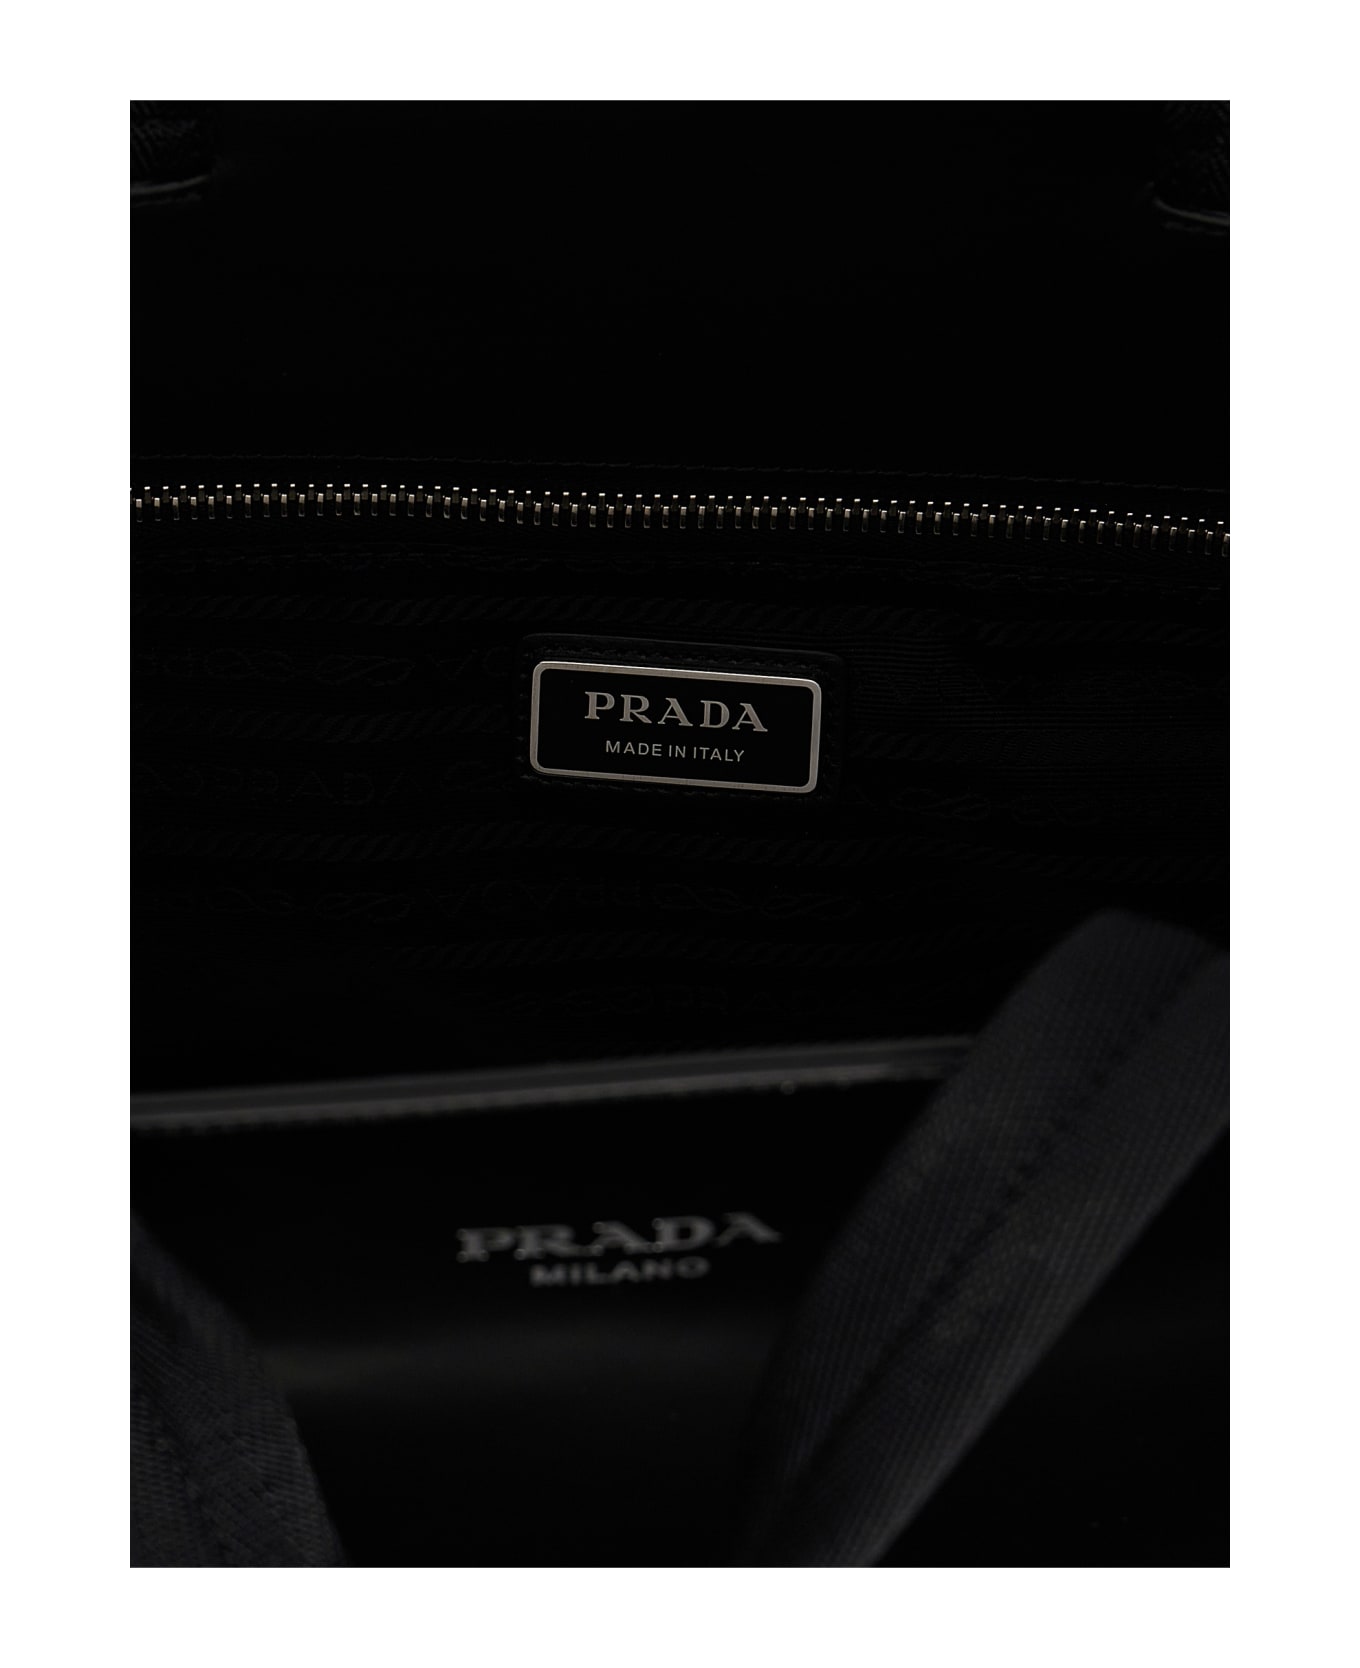 Prada Leather + Bottle Shopping Bag - Black トートバッグ